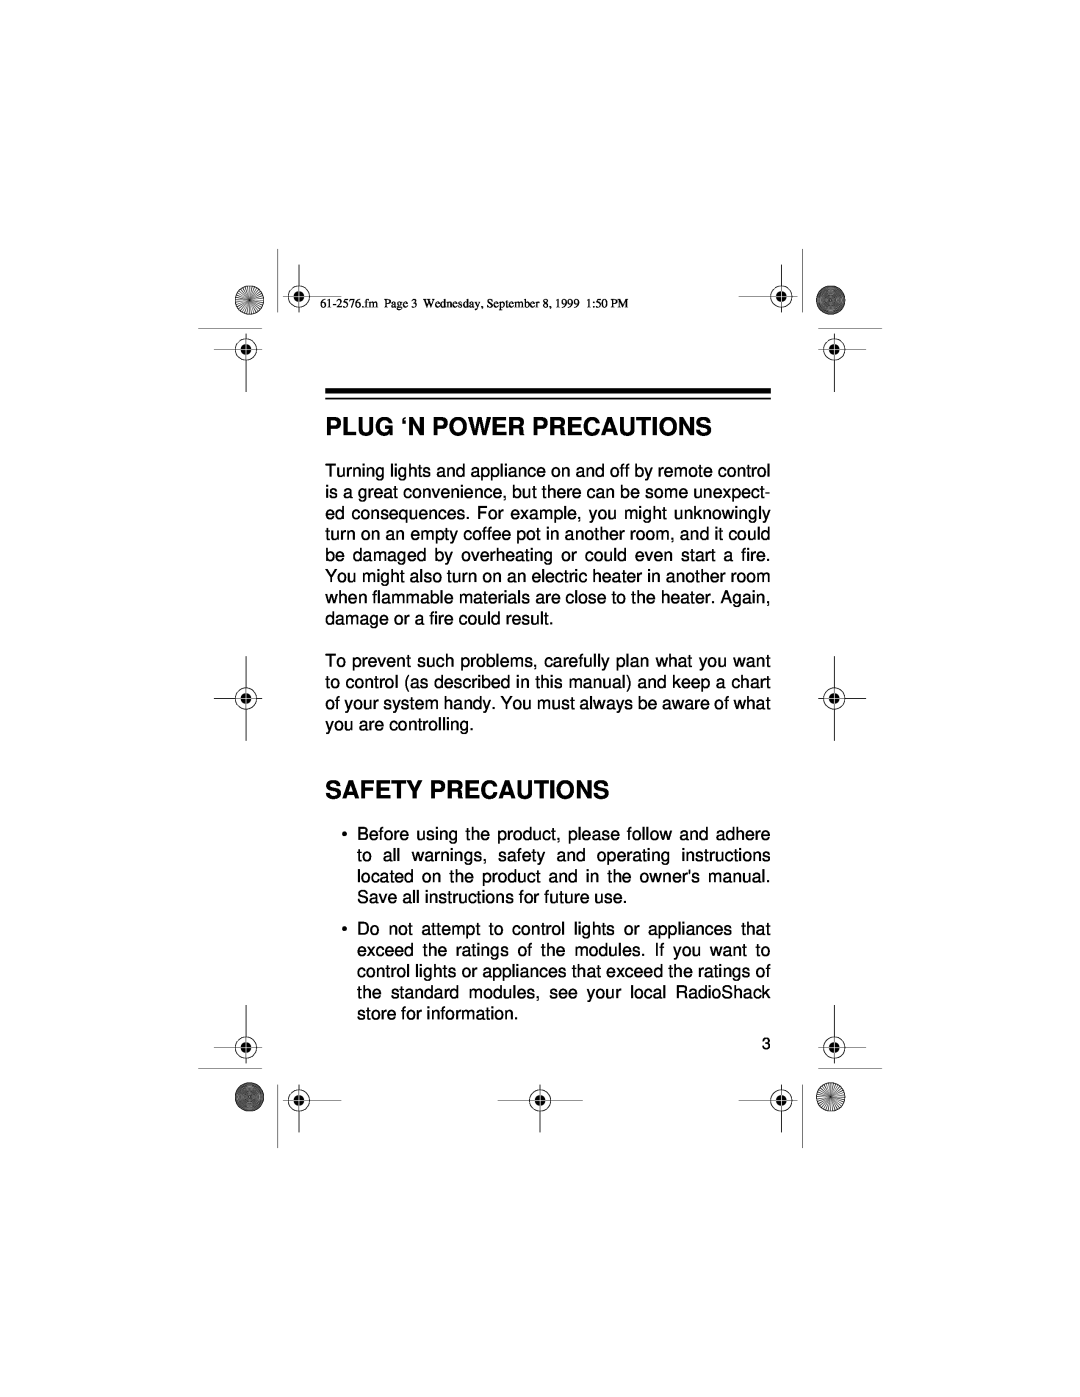 Radio Shack Wireless Remote Control System owner manual Plug ‘N Power Precautions, Safety Precautions 